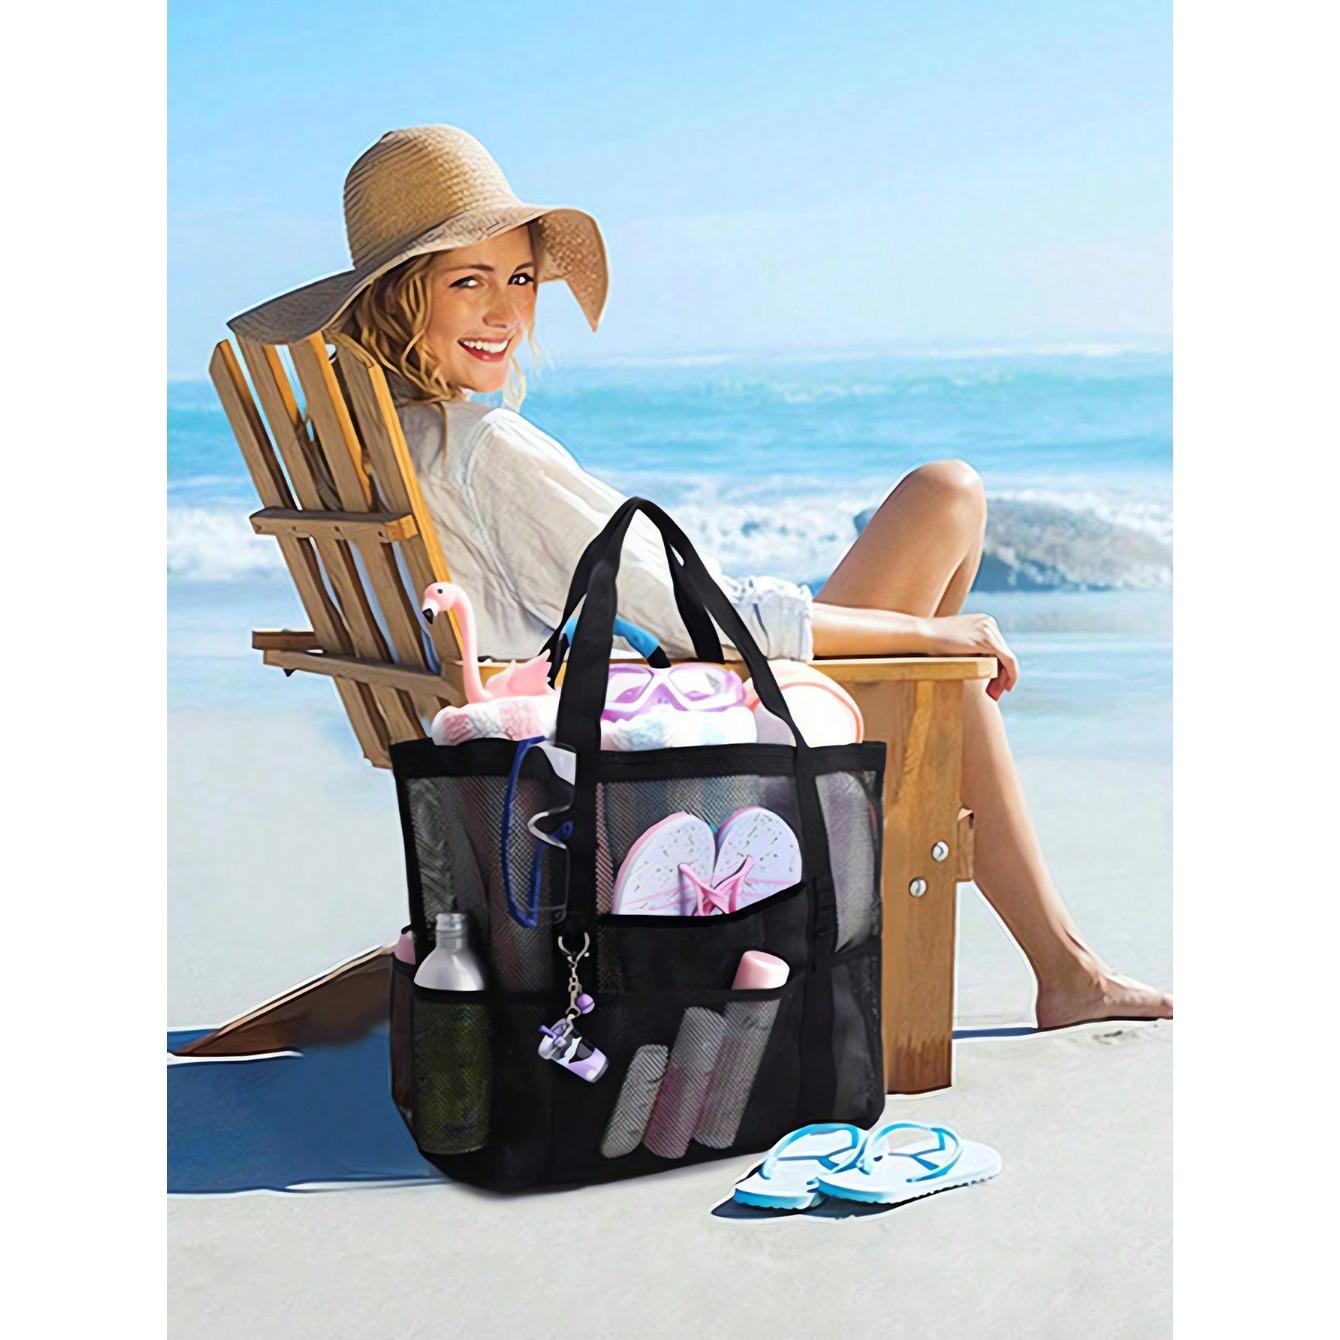 Starry Goods Large Capacity Waterproof Beach Bag,Lightweight Foldable Beach Bag, Portable Travel Bag, Mesh Beach Bag - Sandproof Swim Tote Bag